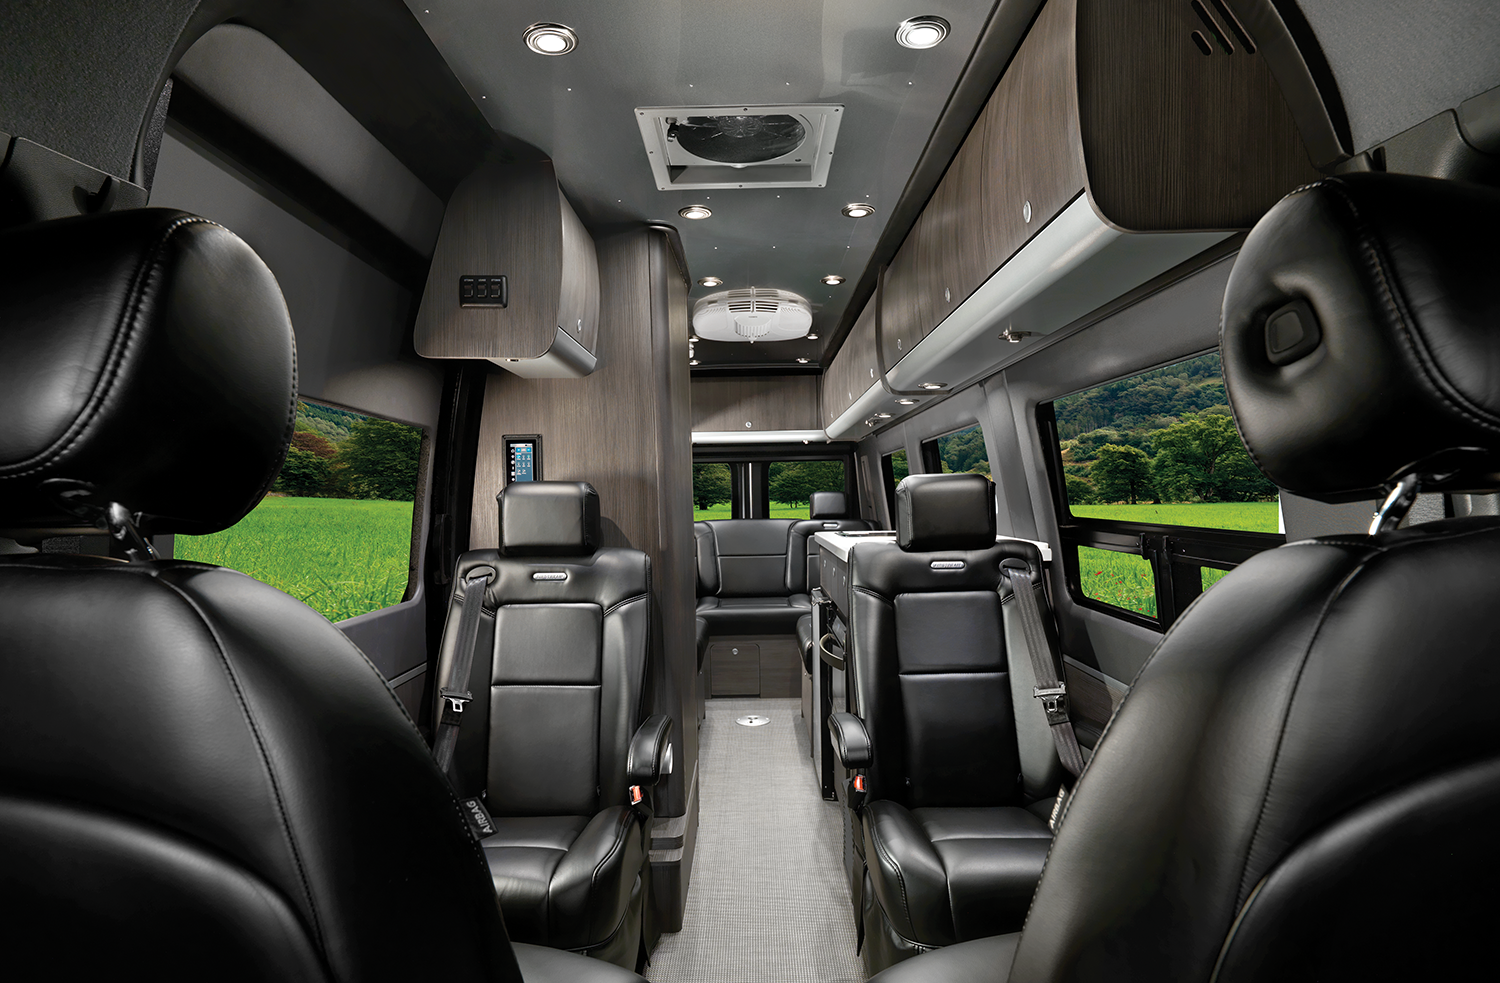 Airstream Mercedes Benz Class B motorhome interior decor formal black leather